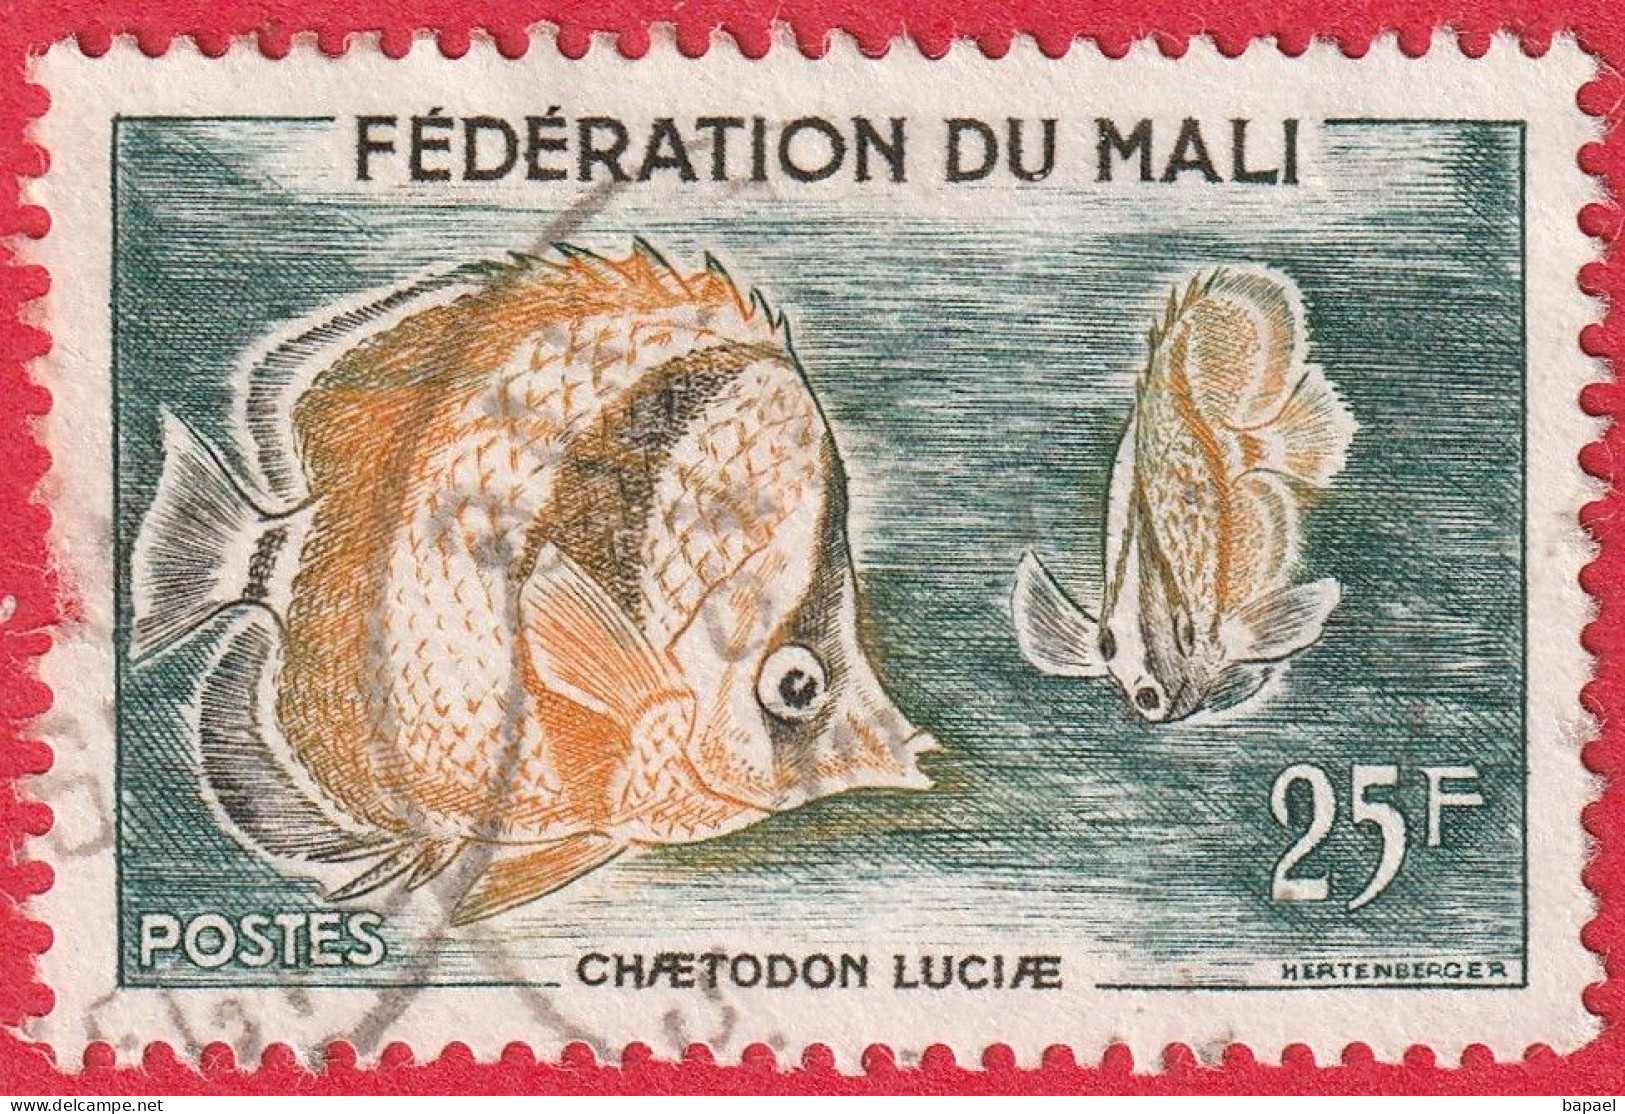 N° Yvert & Tellier 6 - Fédération Du Mali (1960) - (Oblitéré - Sans Gomme) - Poissons (Chaetodon Luciae) (1) - Mali (1959-...)